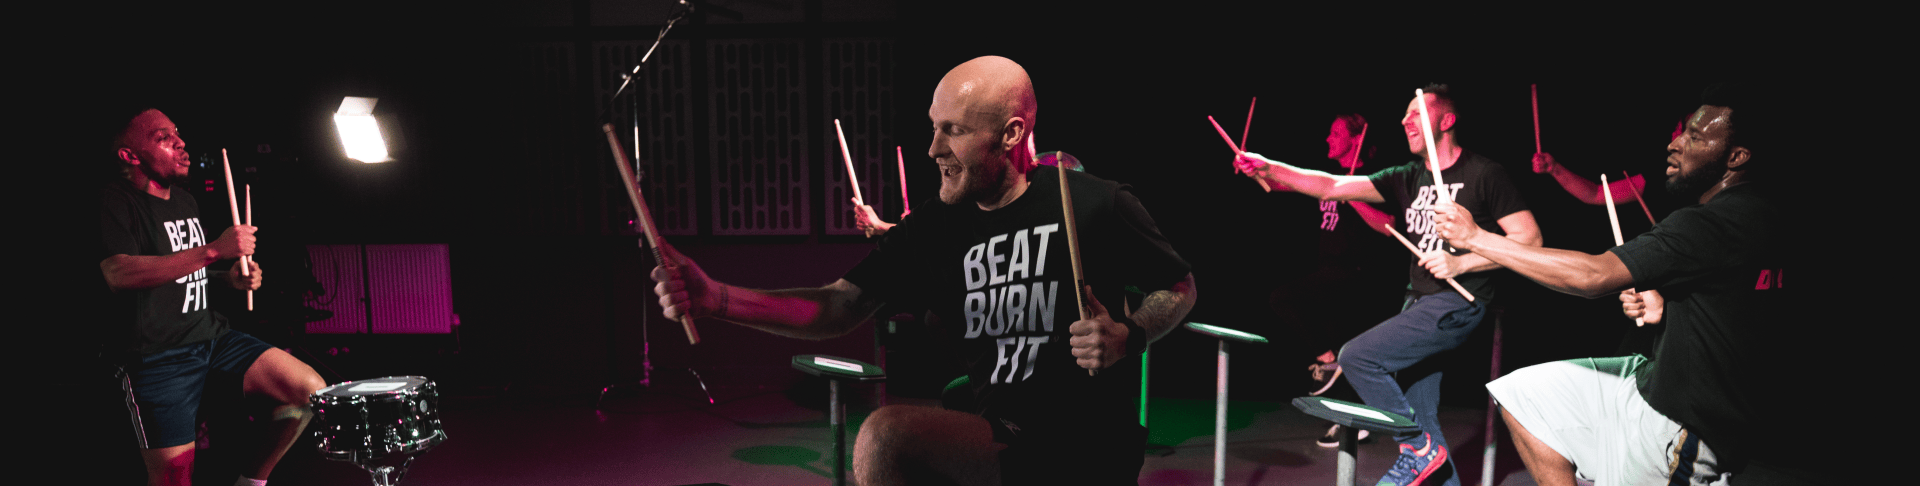 Drumba class image